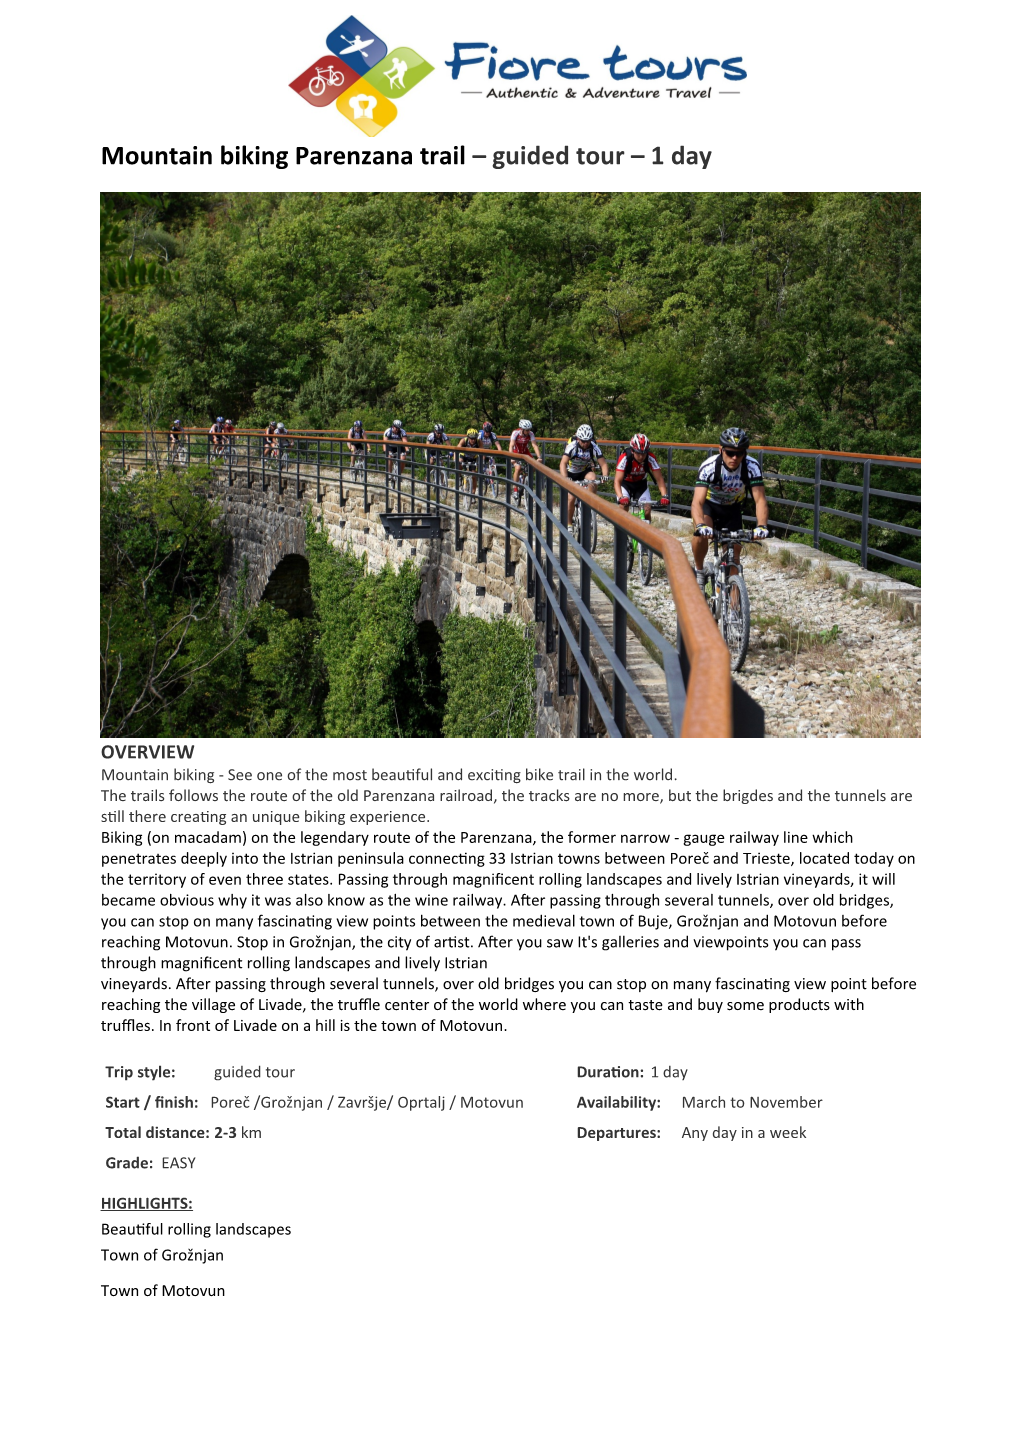 Mountain Biking Parenzana Trail – Guided Tour – 1 Day